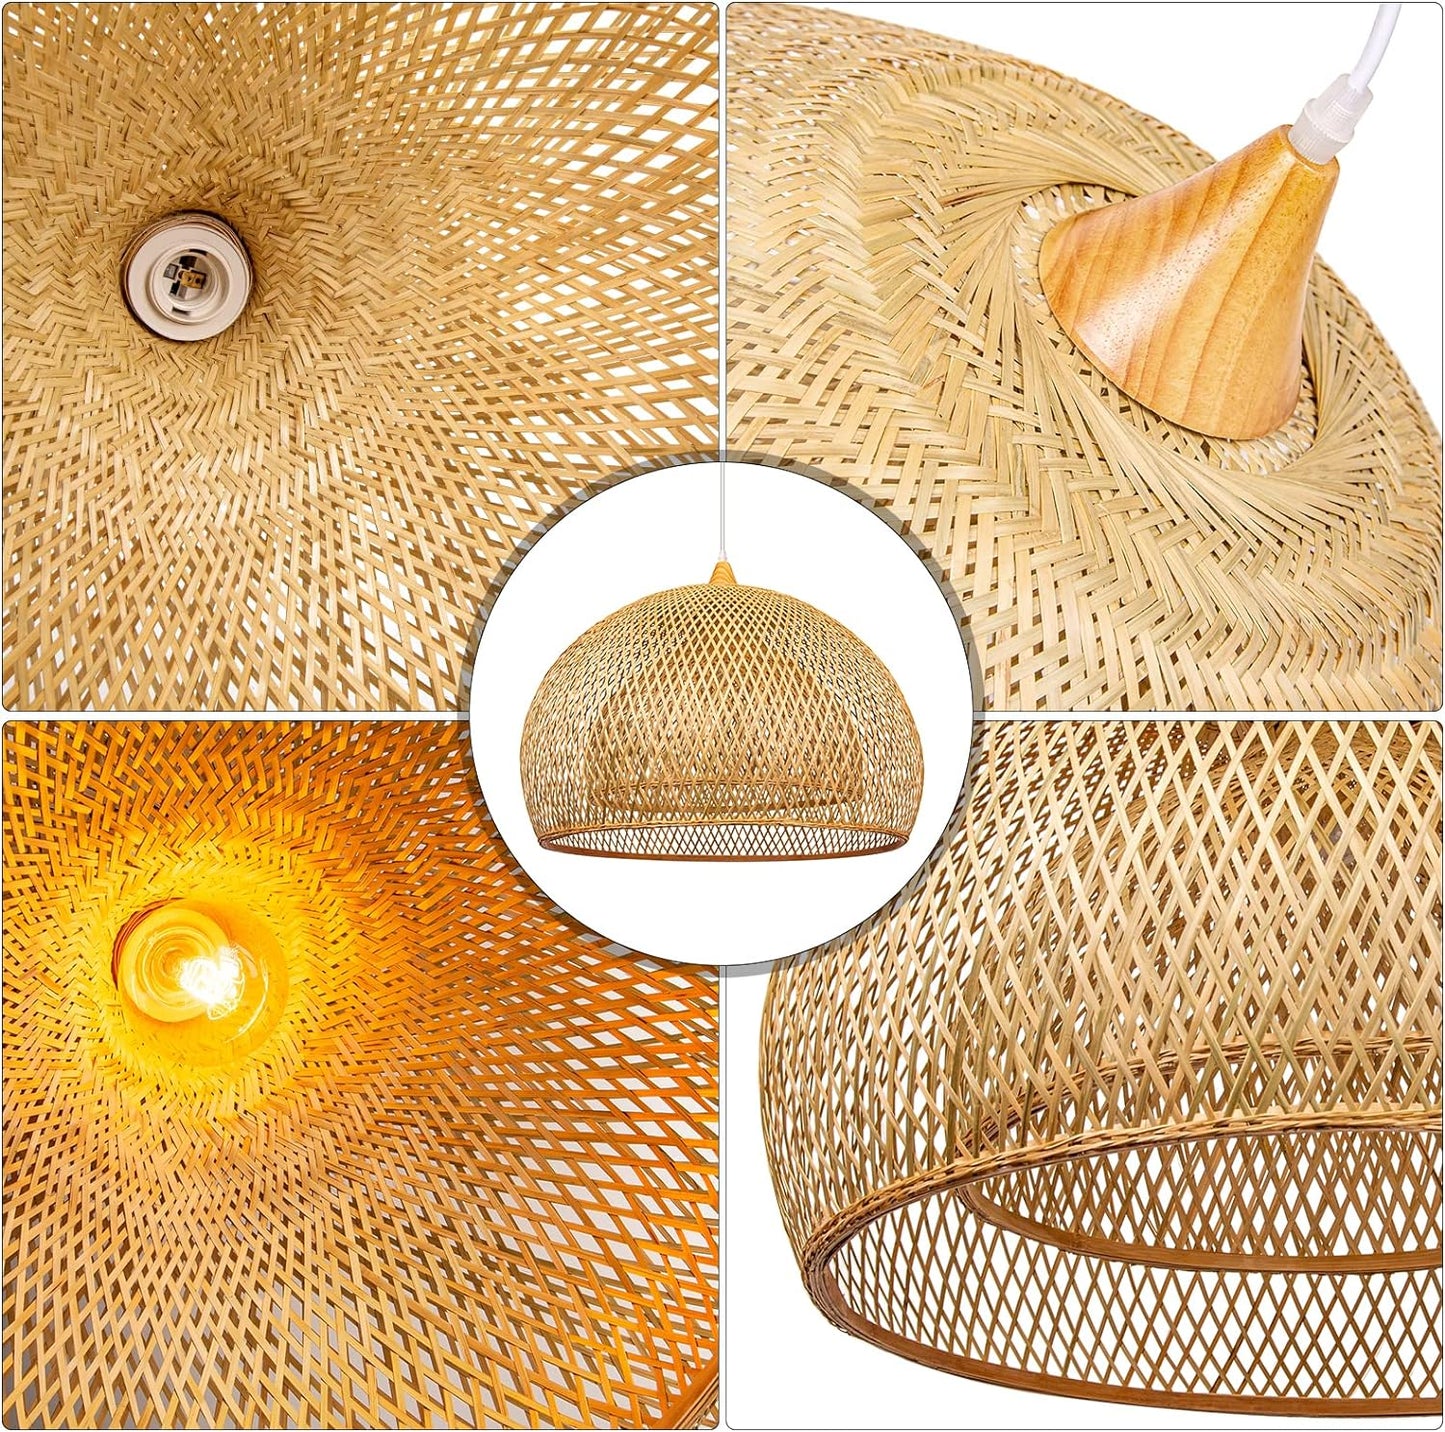 Arturesthome Weaving Bamboo Pendant Light for Kitchen Island, Wicker Chandelier, Handmade Woven Hanging Ceiling Light Lampshade for Living Room Bedroom